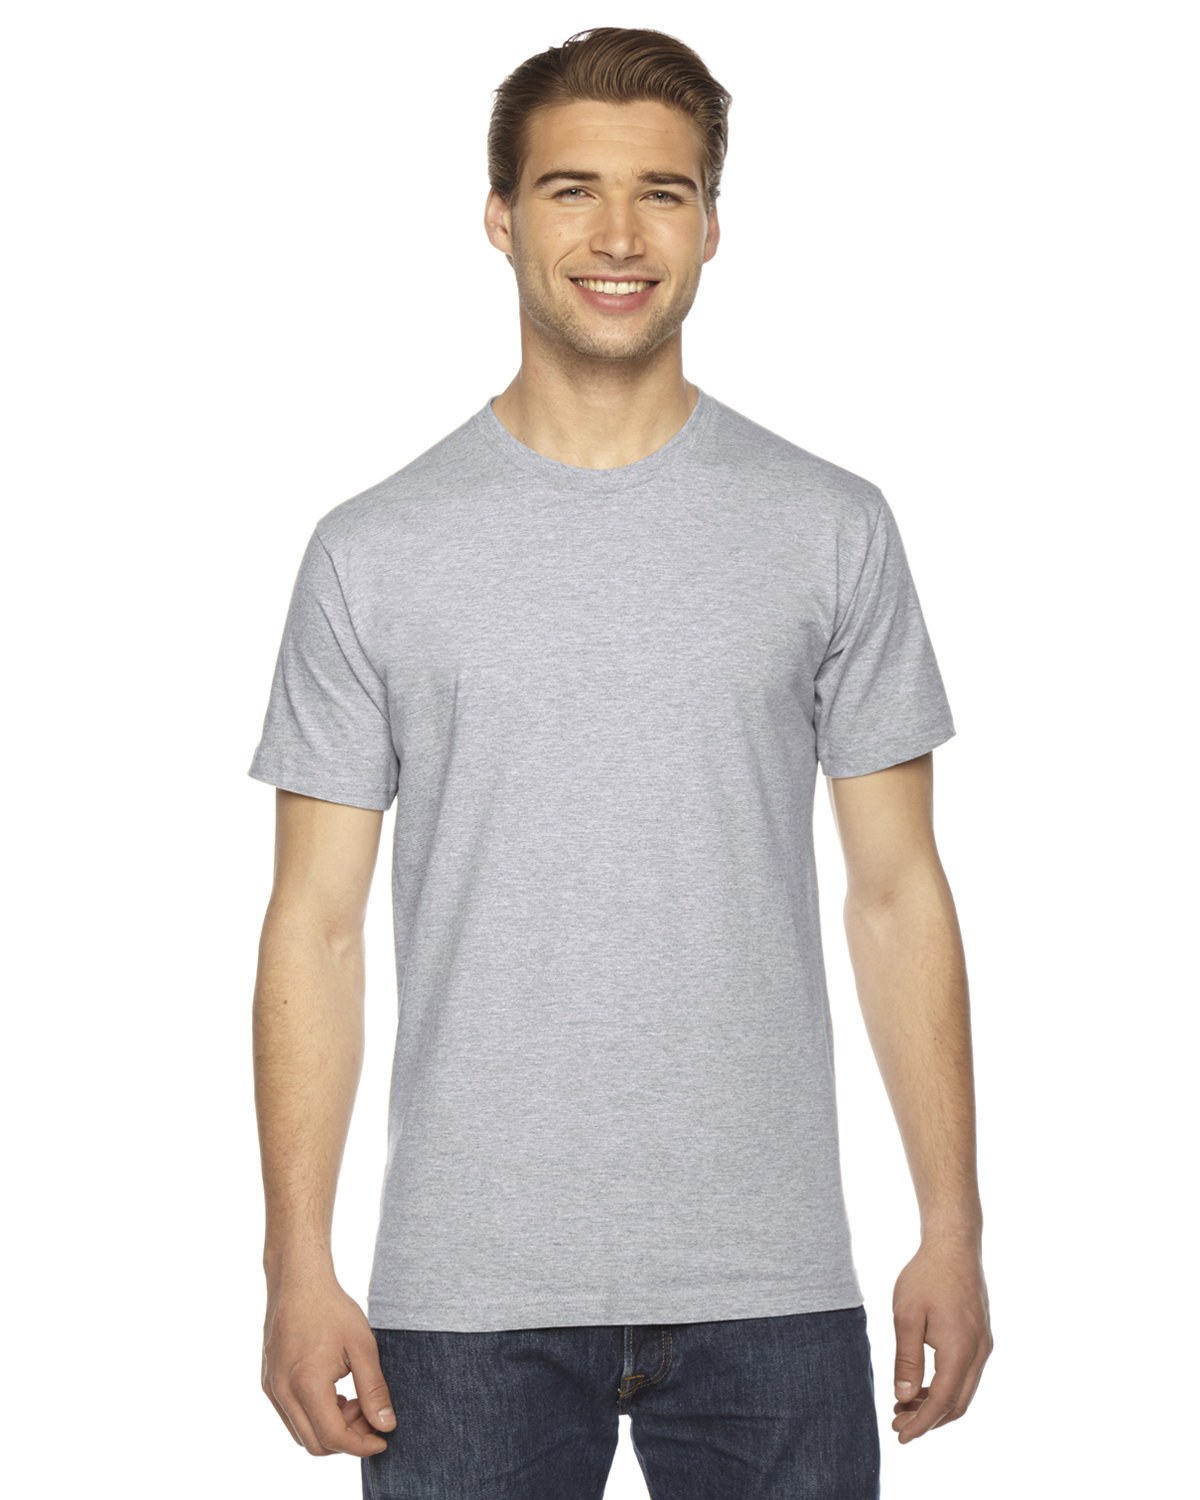 American Apparel Unisex Fine Jersey USA Made T-Shirt heather grey 